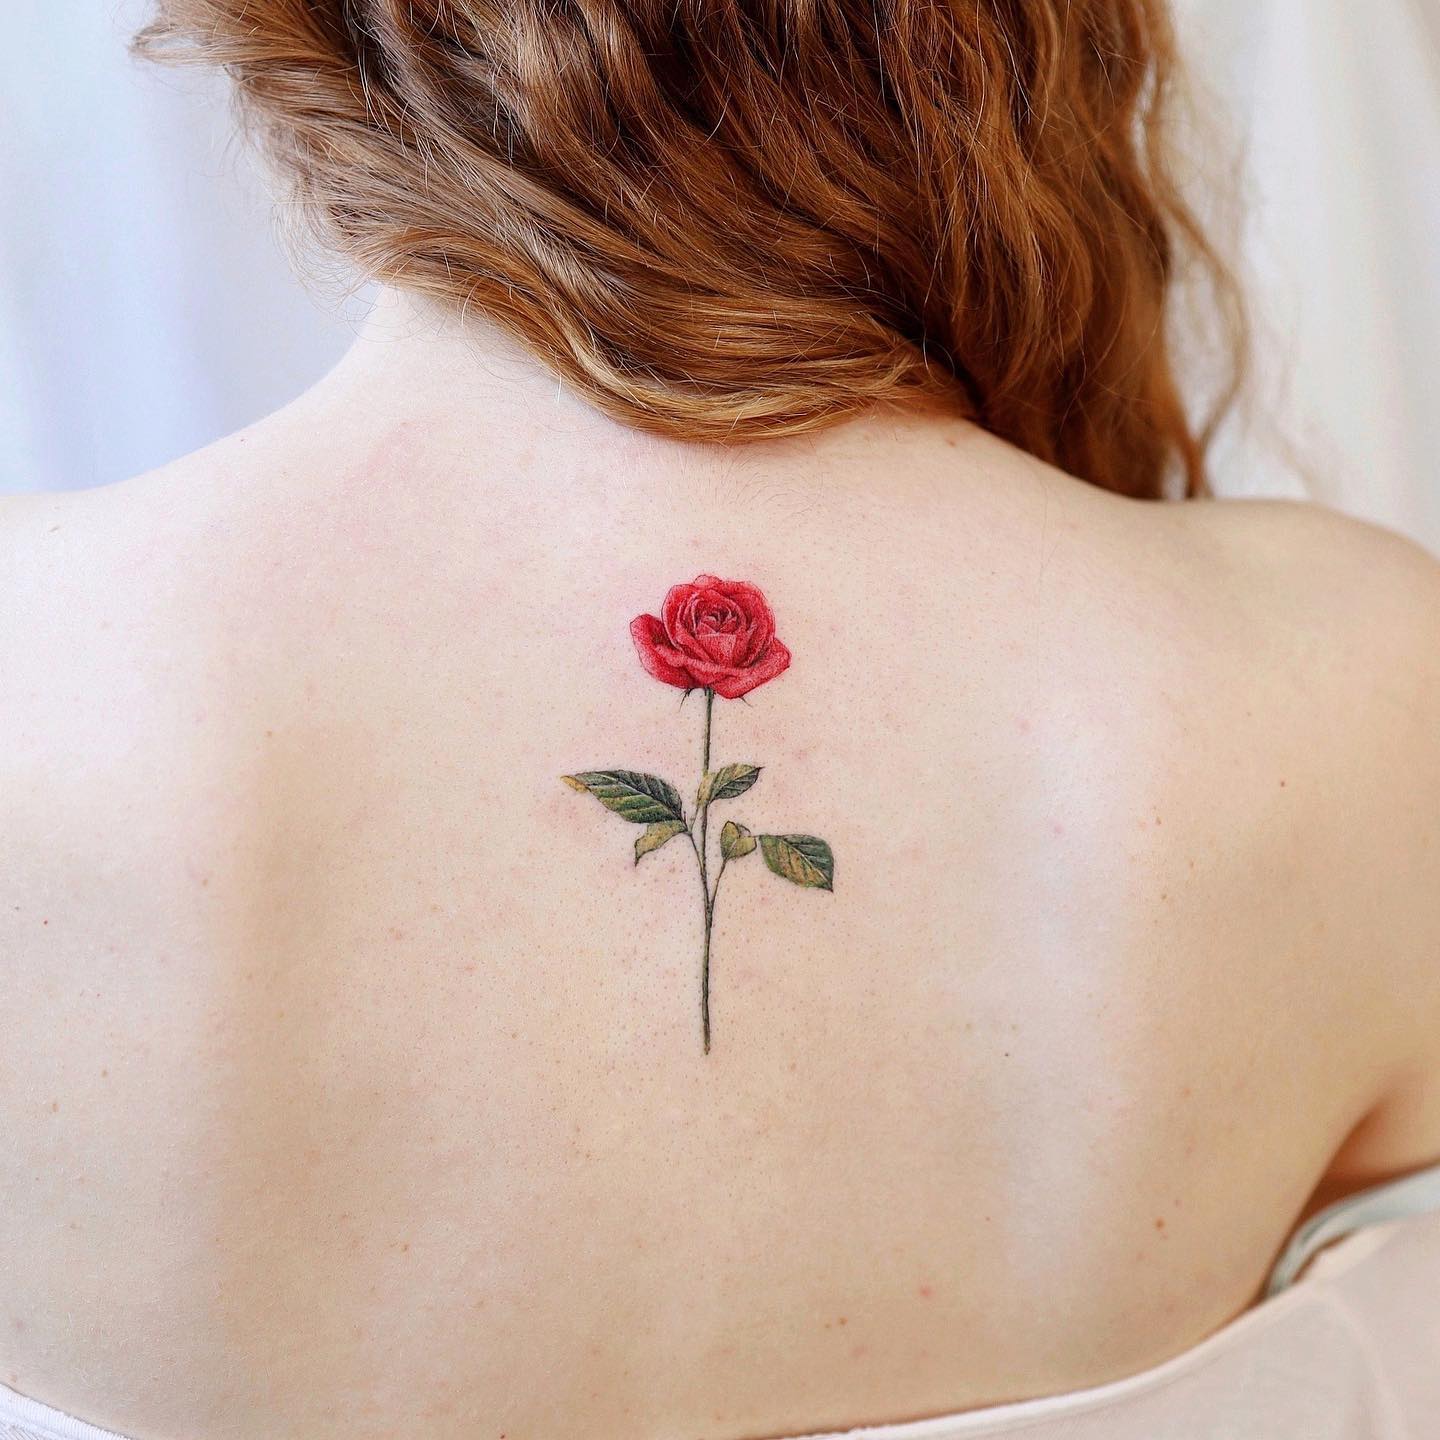 Red rose tattoo by vane.tattoo